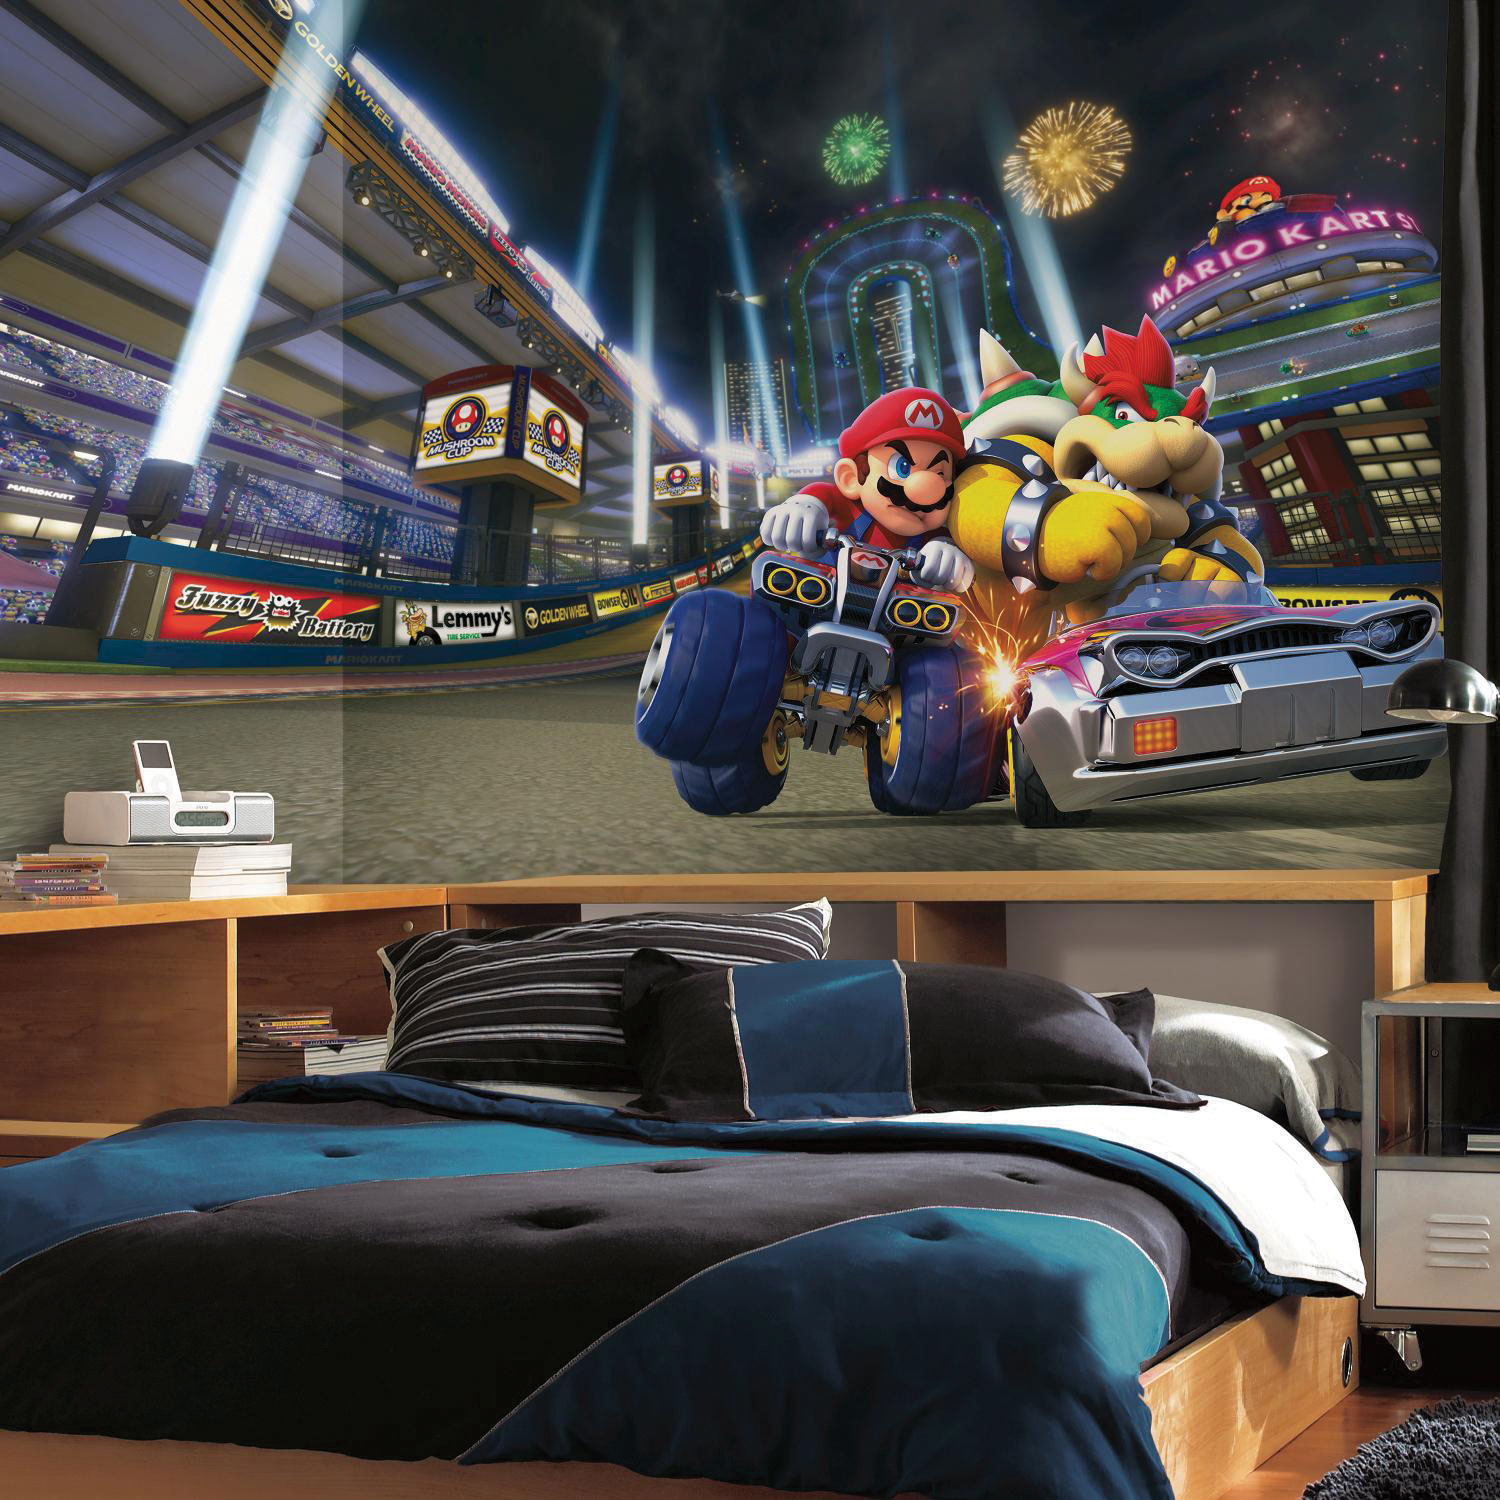 RoomMates Mario Kart 8 6' x 10.5' Wallpaper Mural